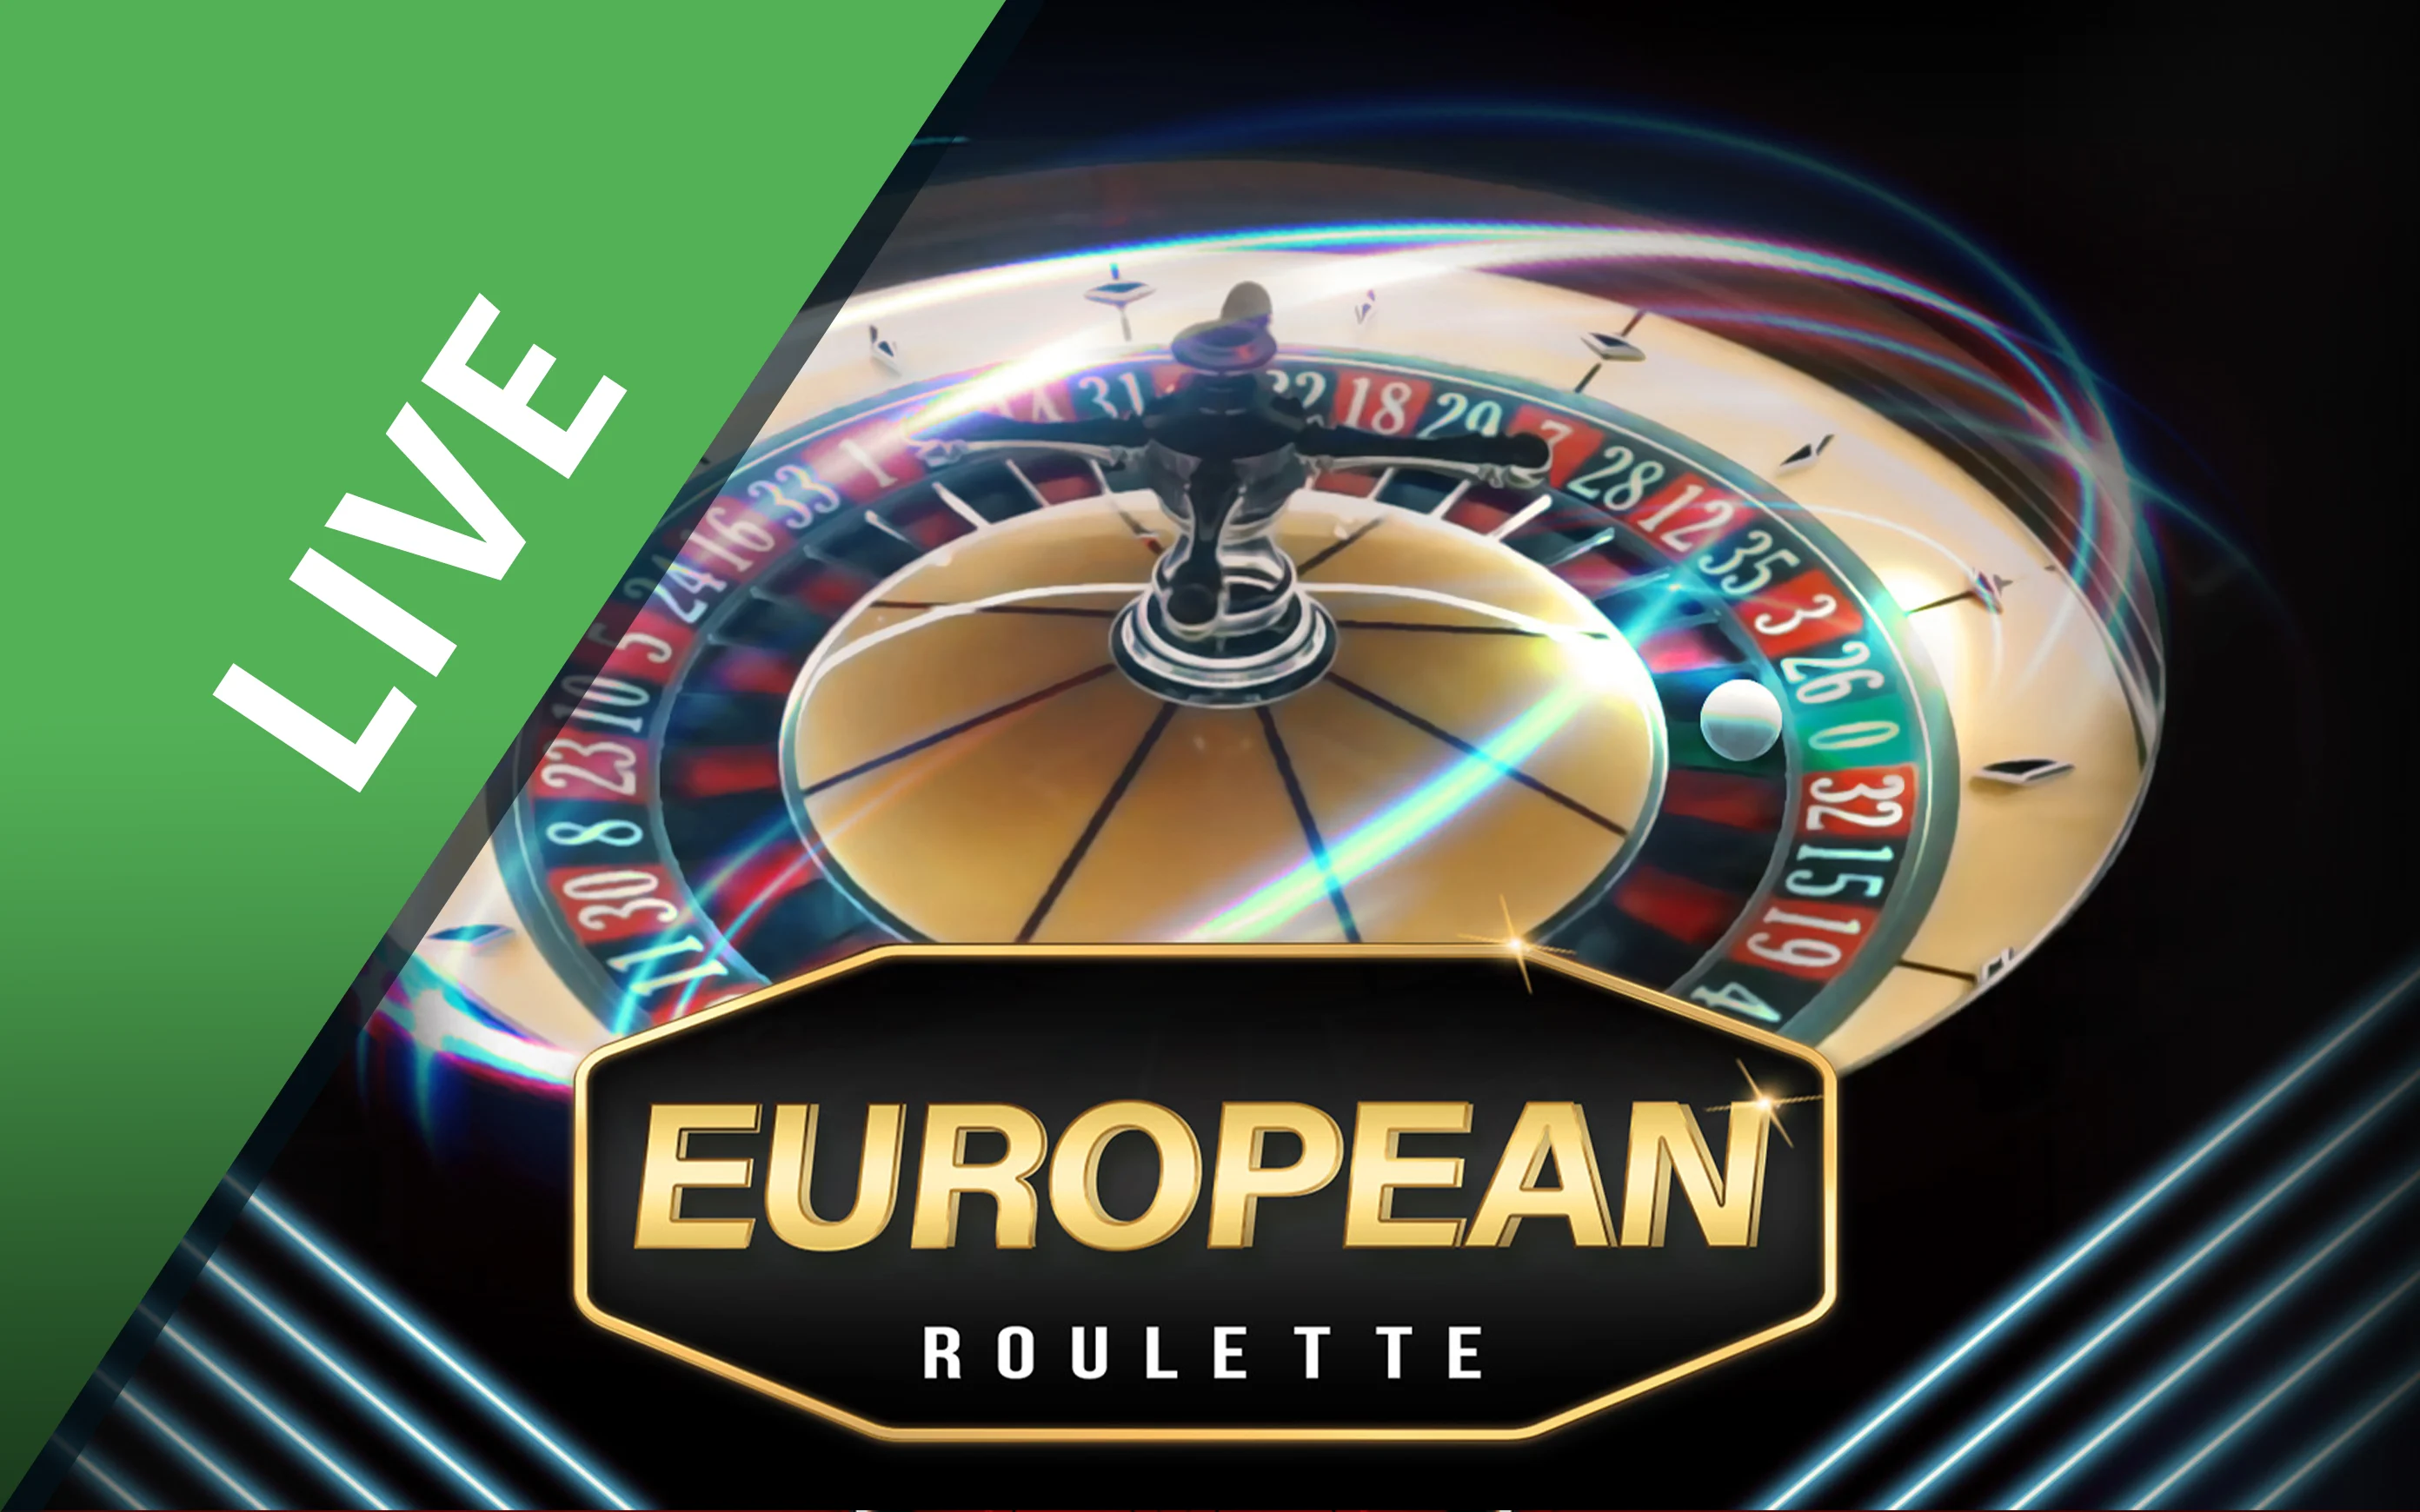 Play European Roulette on Starcasino.be online casino